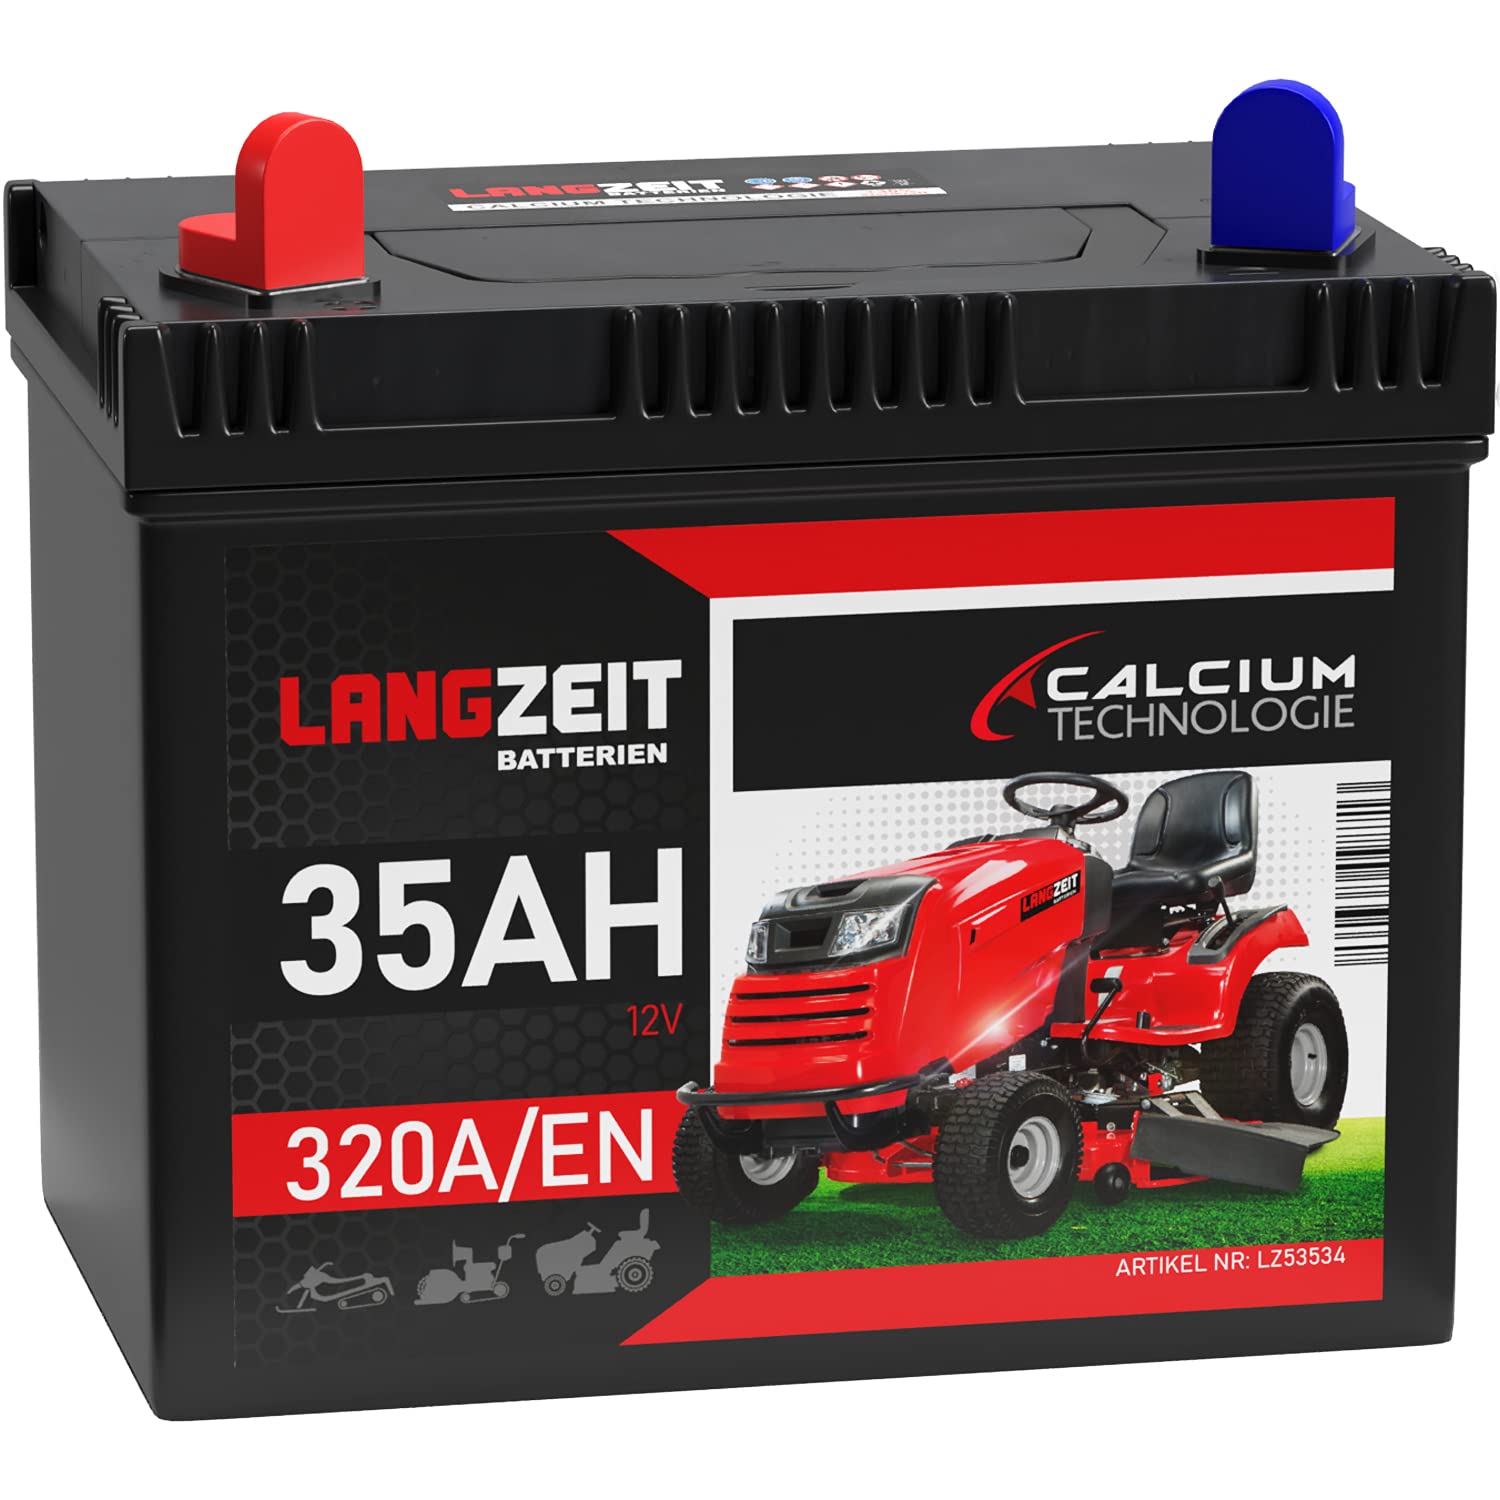 Langzeit Rasentraktor Batterie 12V 35Ah Starterbatterie Aufsitzmäher Rasenmäher Plus Pol links statt 26Ah 30Ah 32Ah von LANGZEIT Batterien